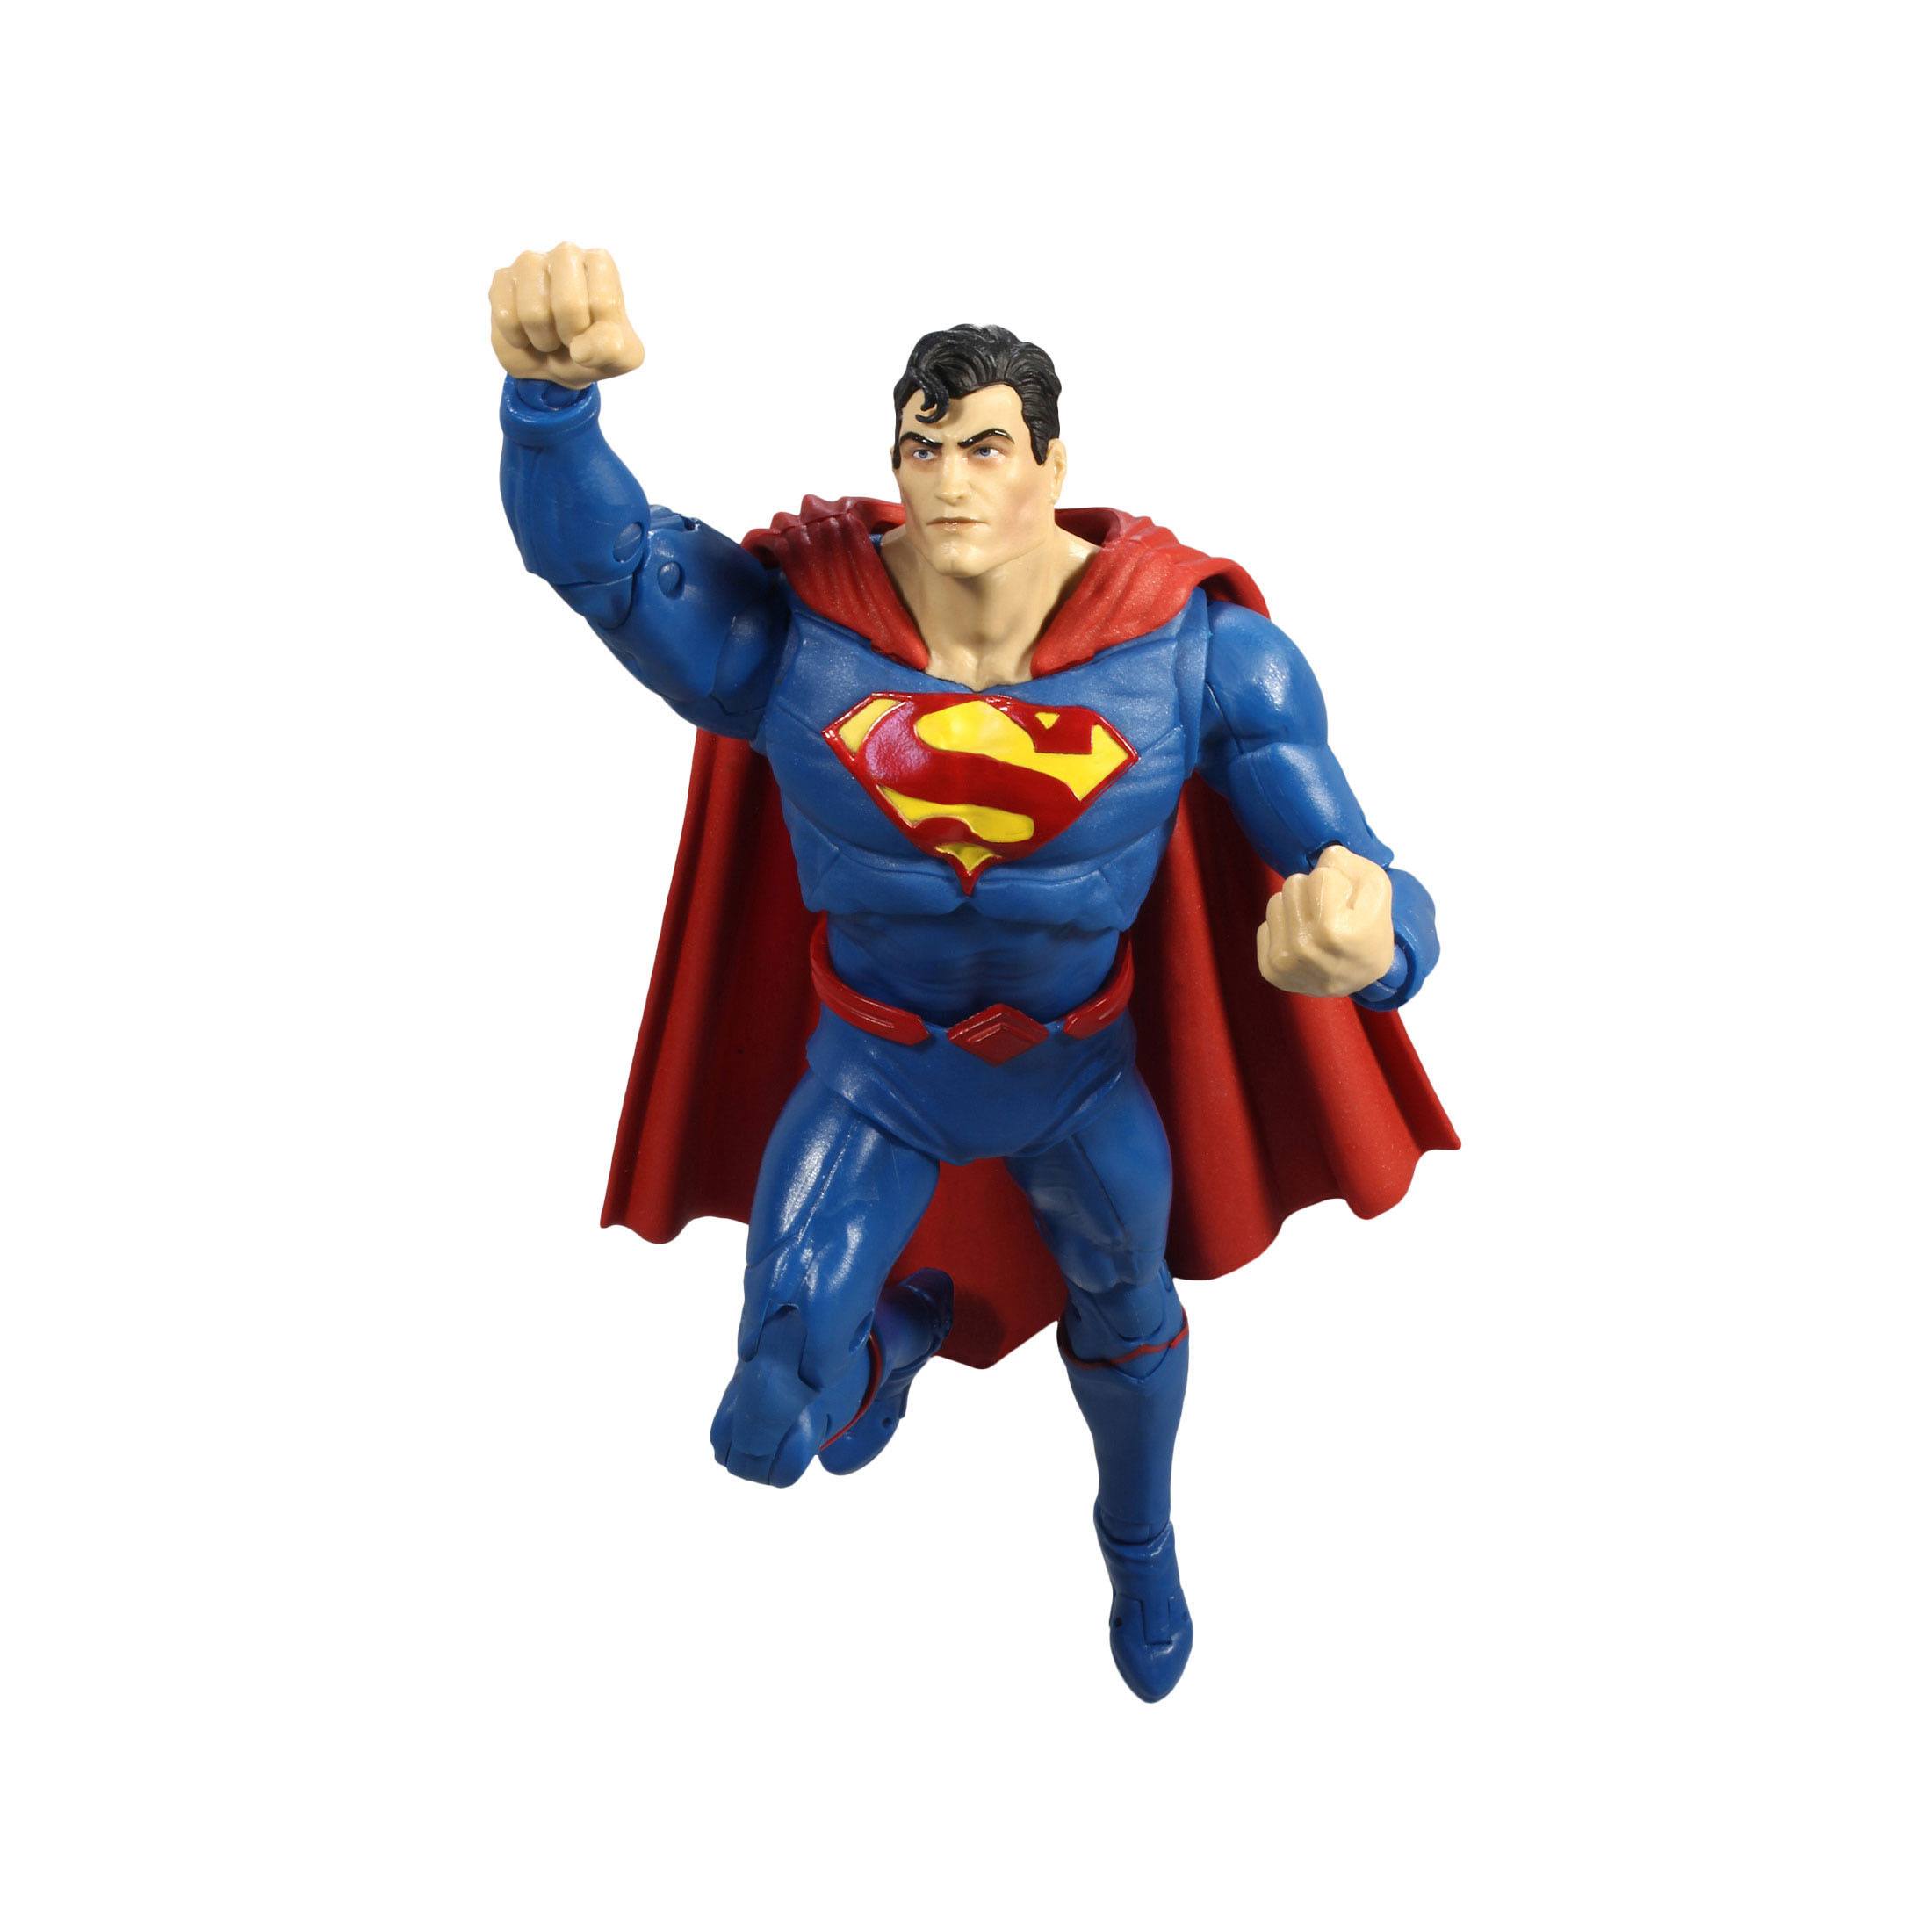 DC Multiverse Actionfigur Superman DC Rebirth 18 cm MCF15183 787926151831